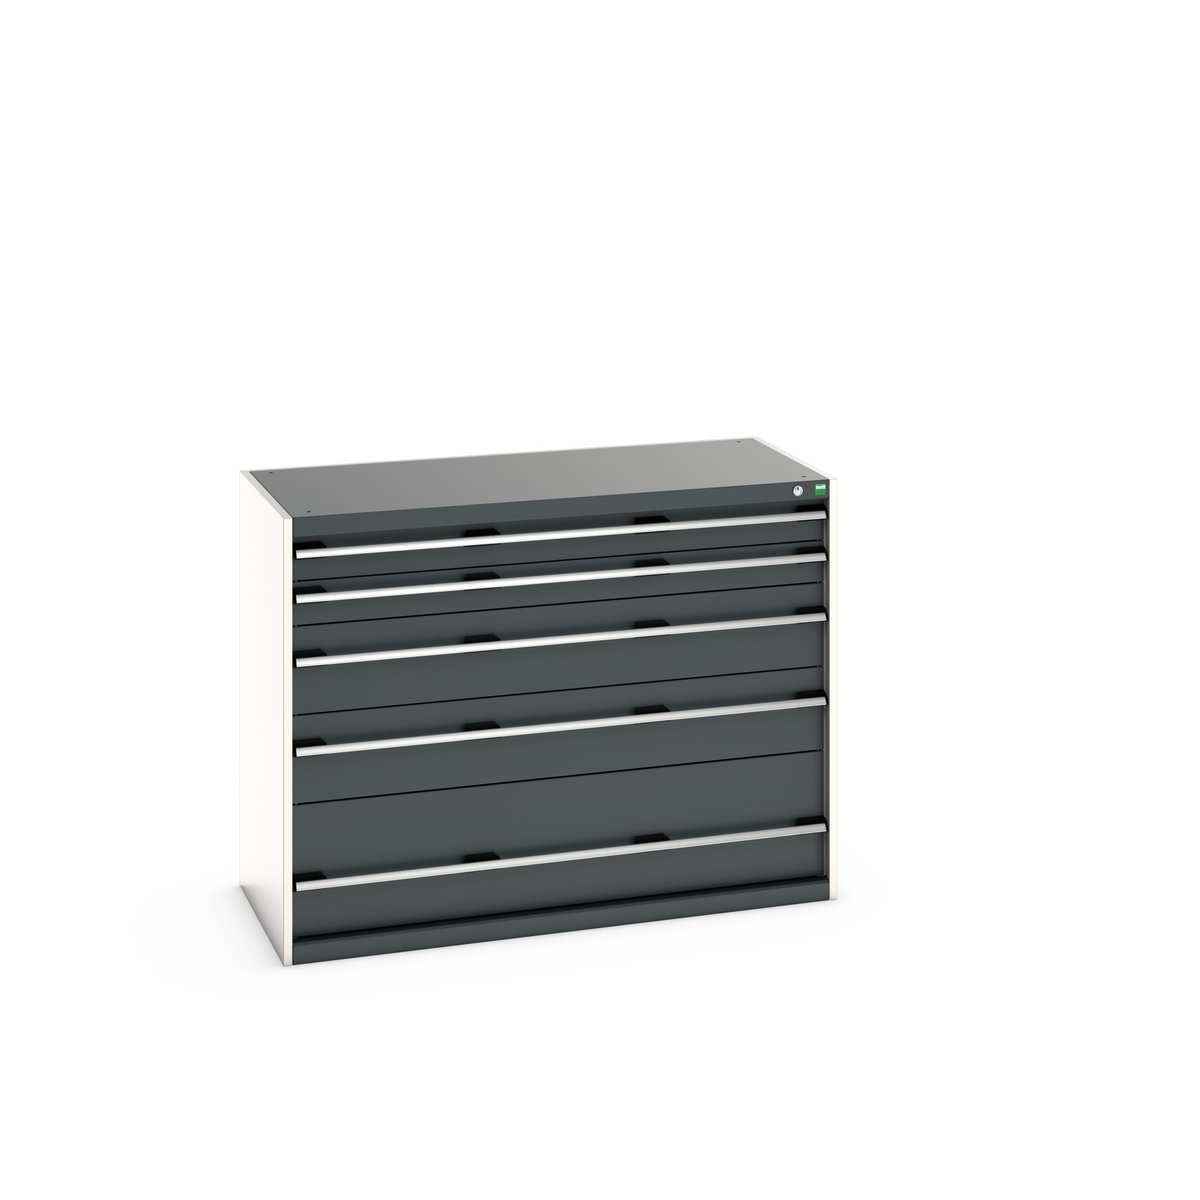 40022122. - cubio drawer cabinet